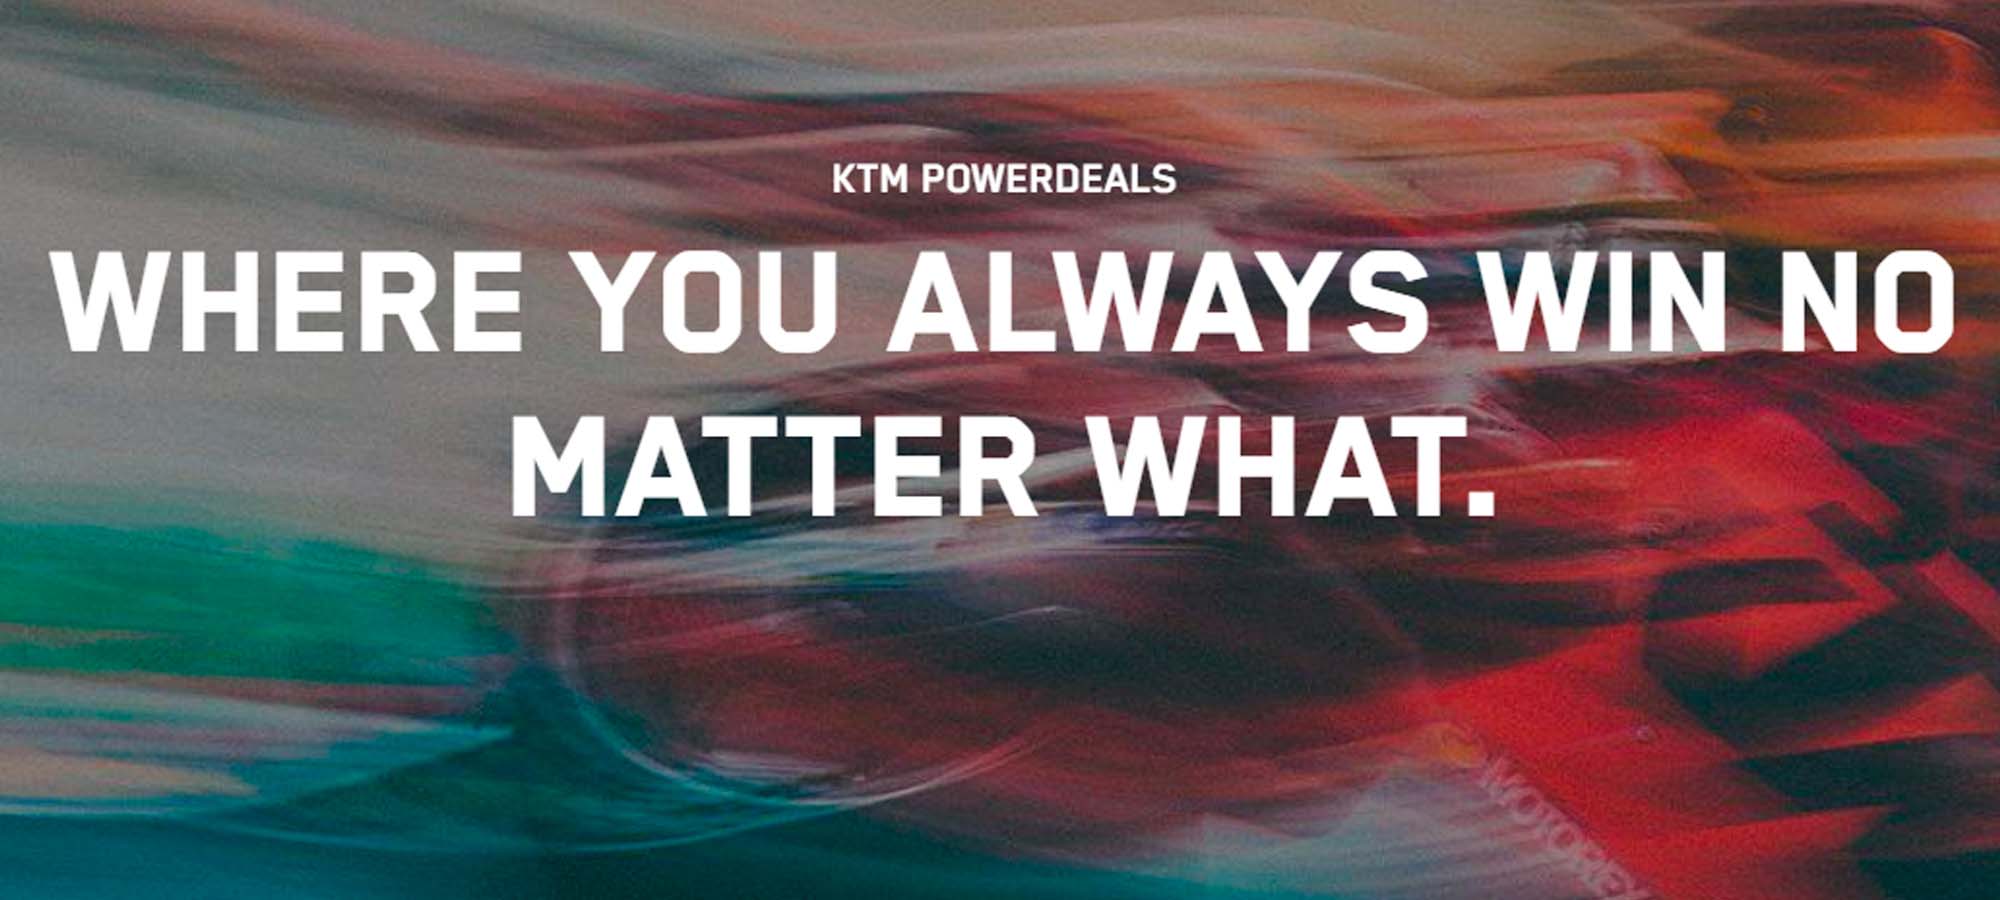 KTM US - KTM POWERDEALS RETAIL SALES PROMOTIONS b at Stahlman Powersports